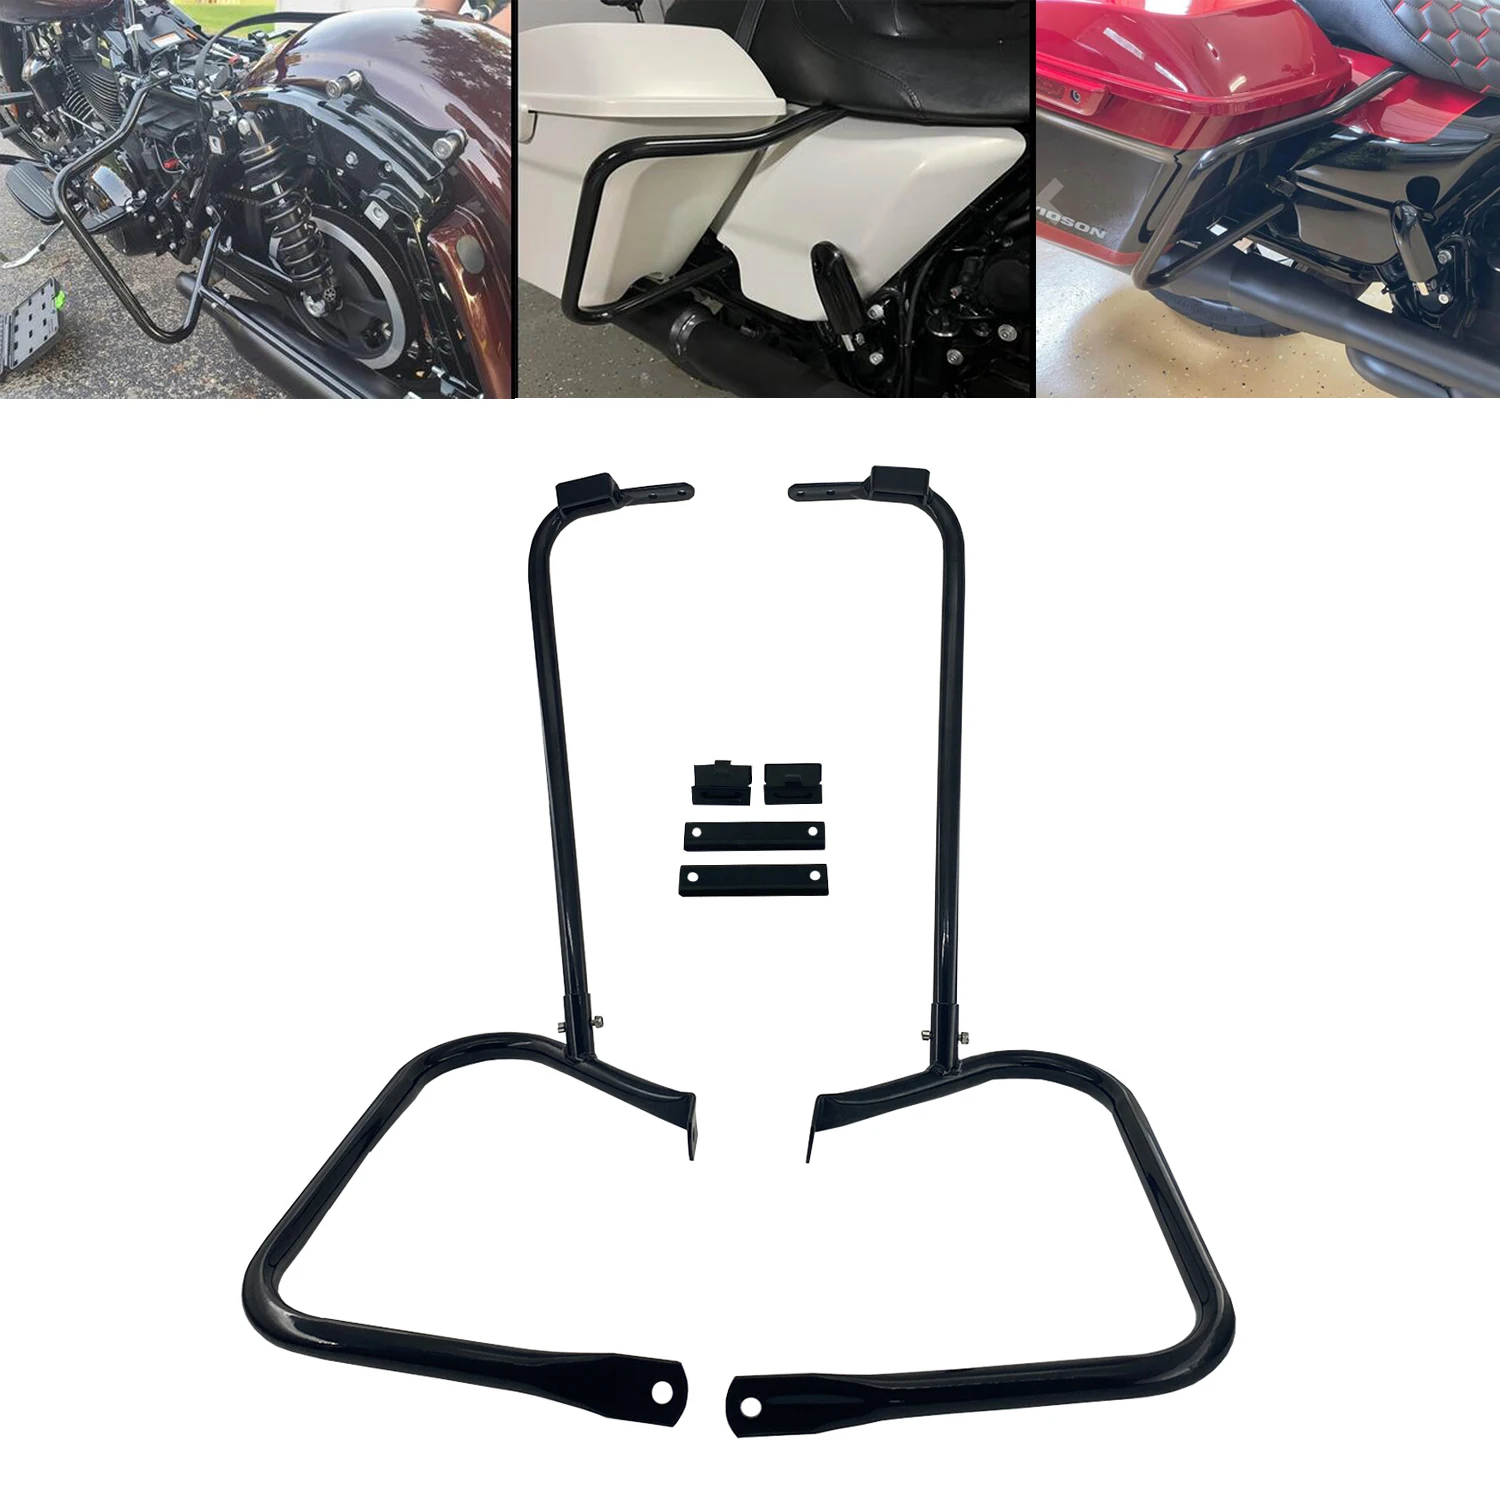 black-saddle-bag-guard-bracket-side-mount-support-bar-for-harley-touring-road-king-street-electra-glide-ultra-classic-1997-2008